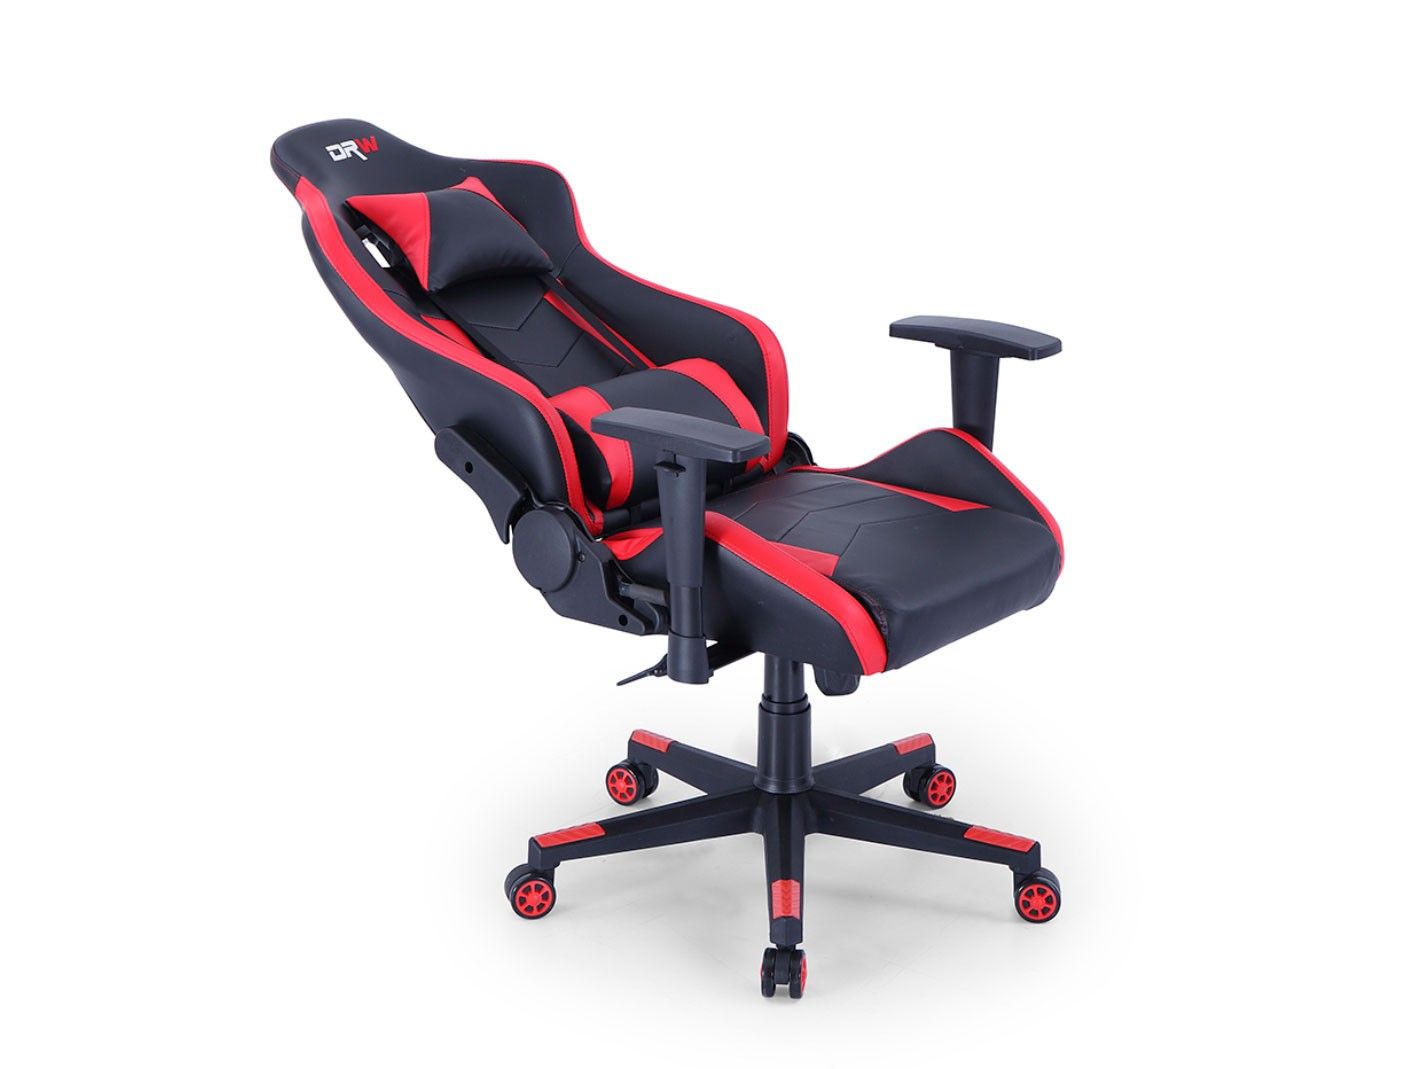 Silla gaming reclinable y giratoria con ruedas antirayas negro - rojo  Merkamueble